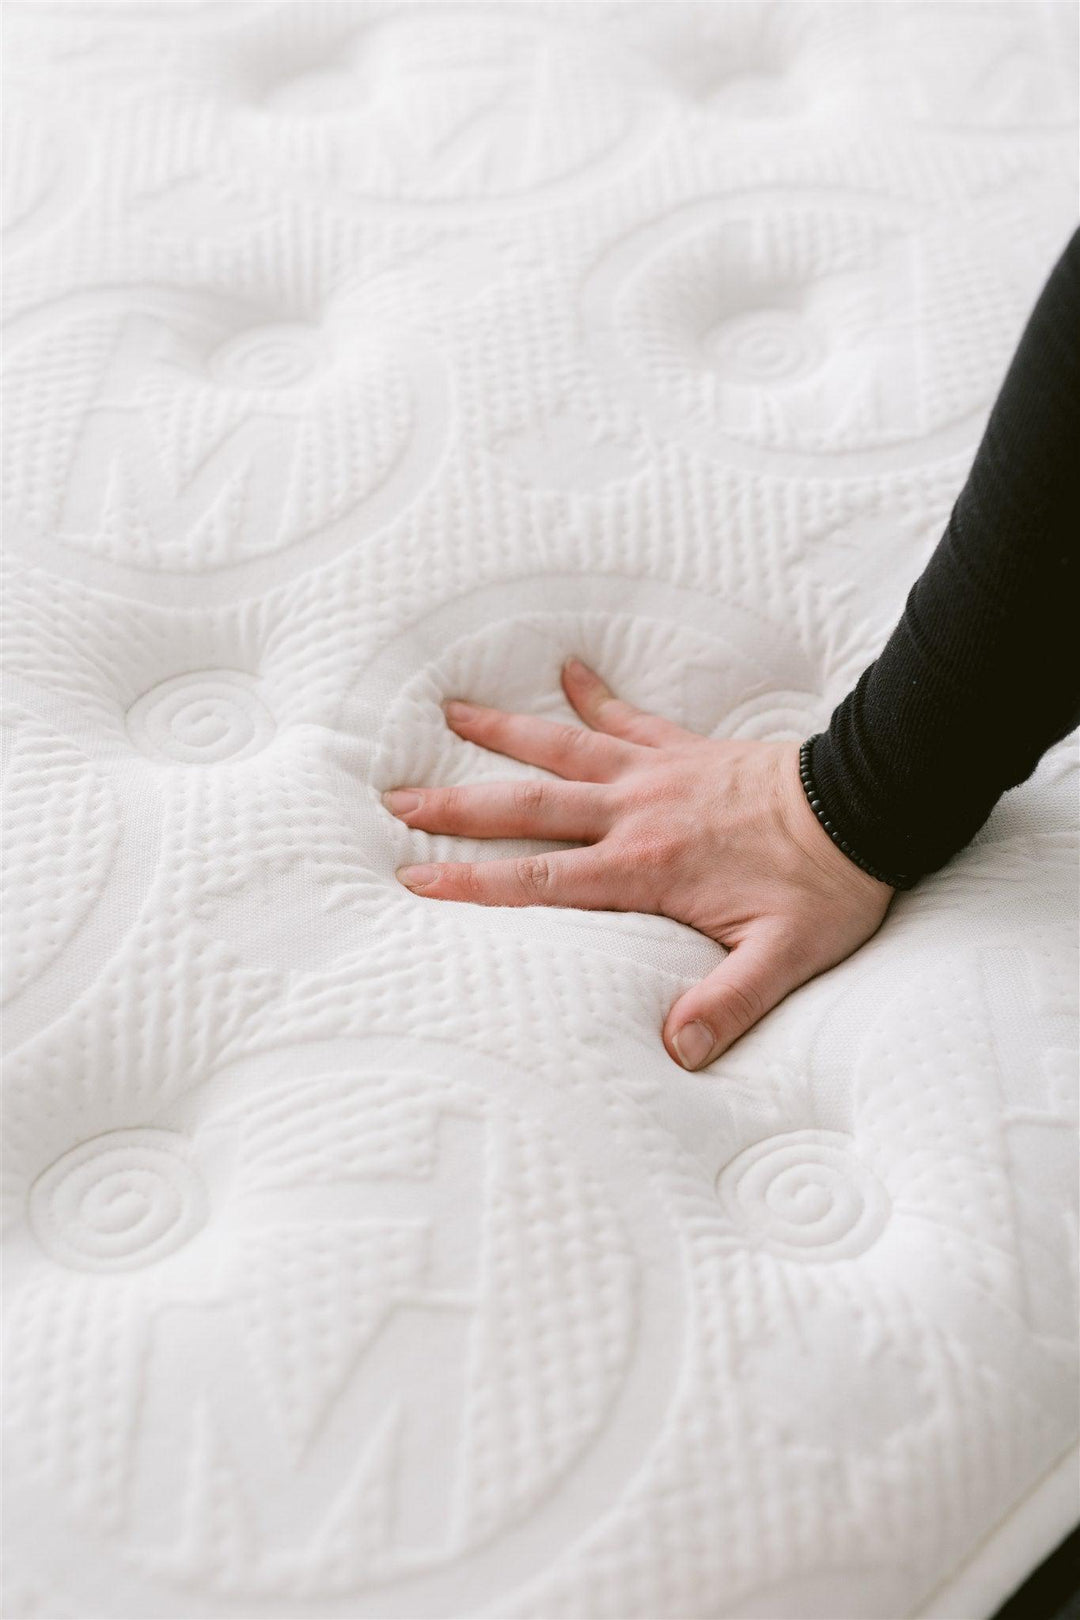 Hand pressing Haven pocket coil mattress